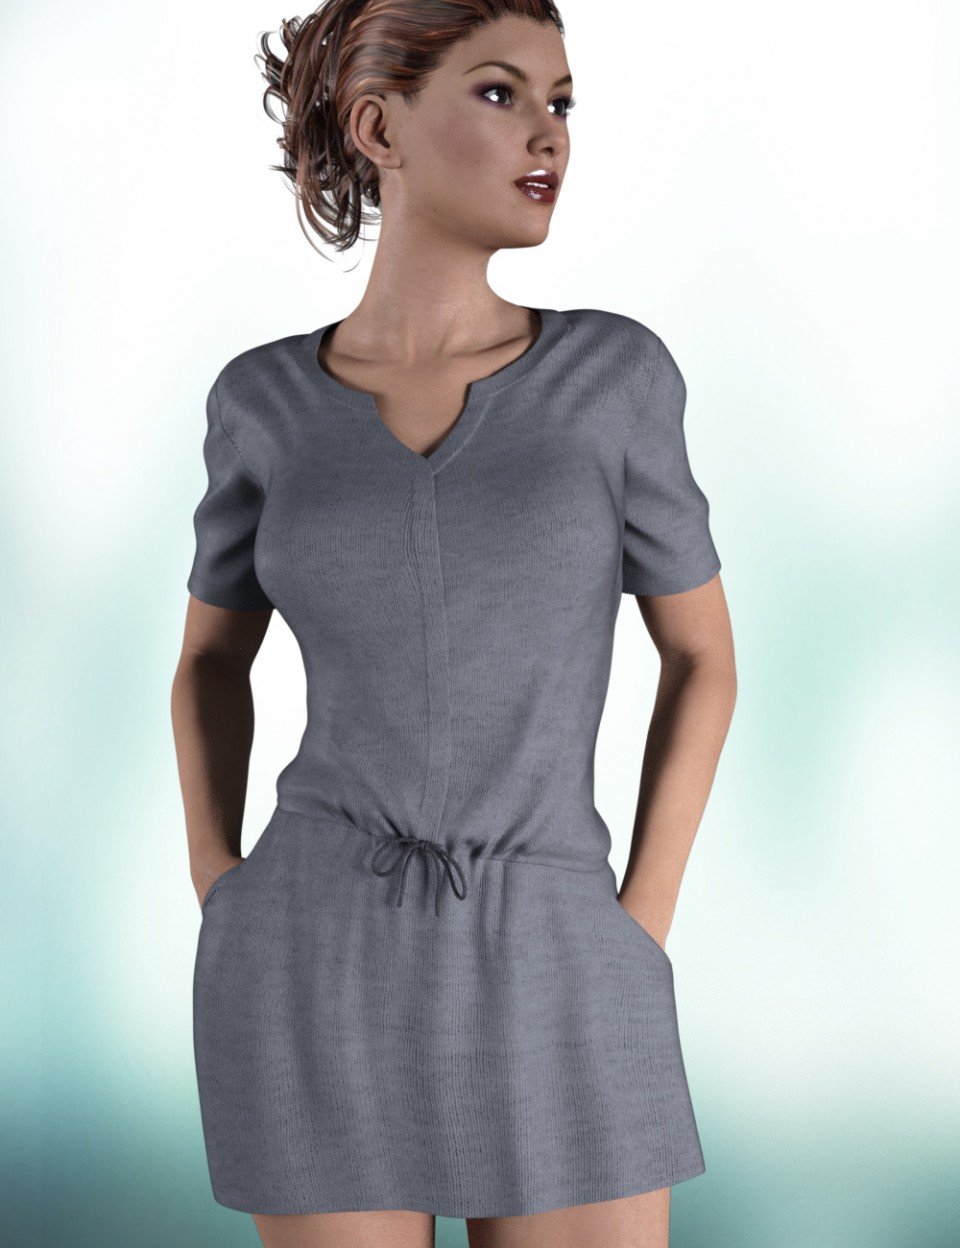 Loose Sweater Dress for Genesis 3 Female(s)_DAZ3D下载站